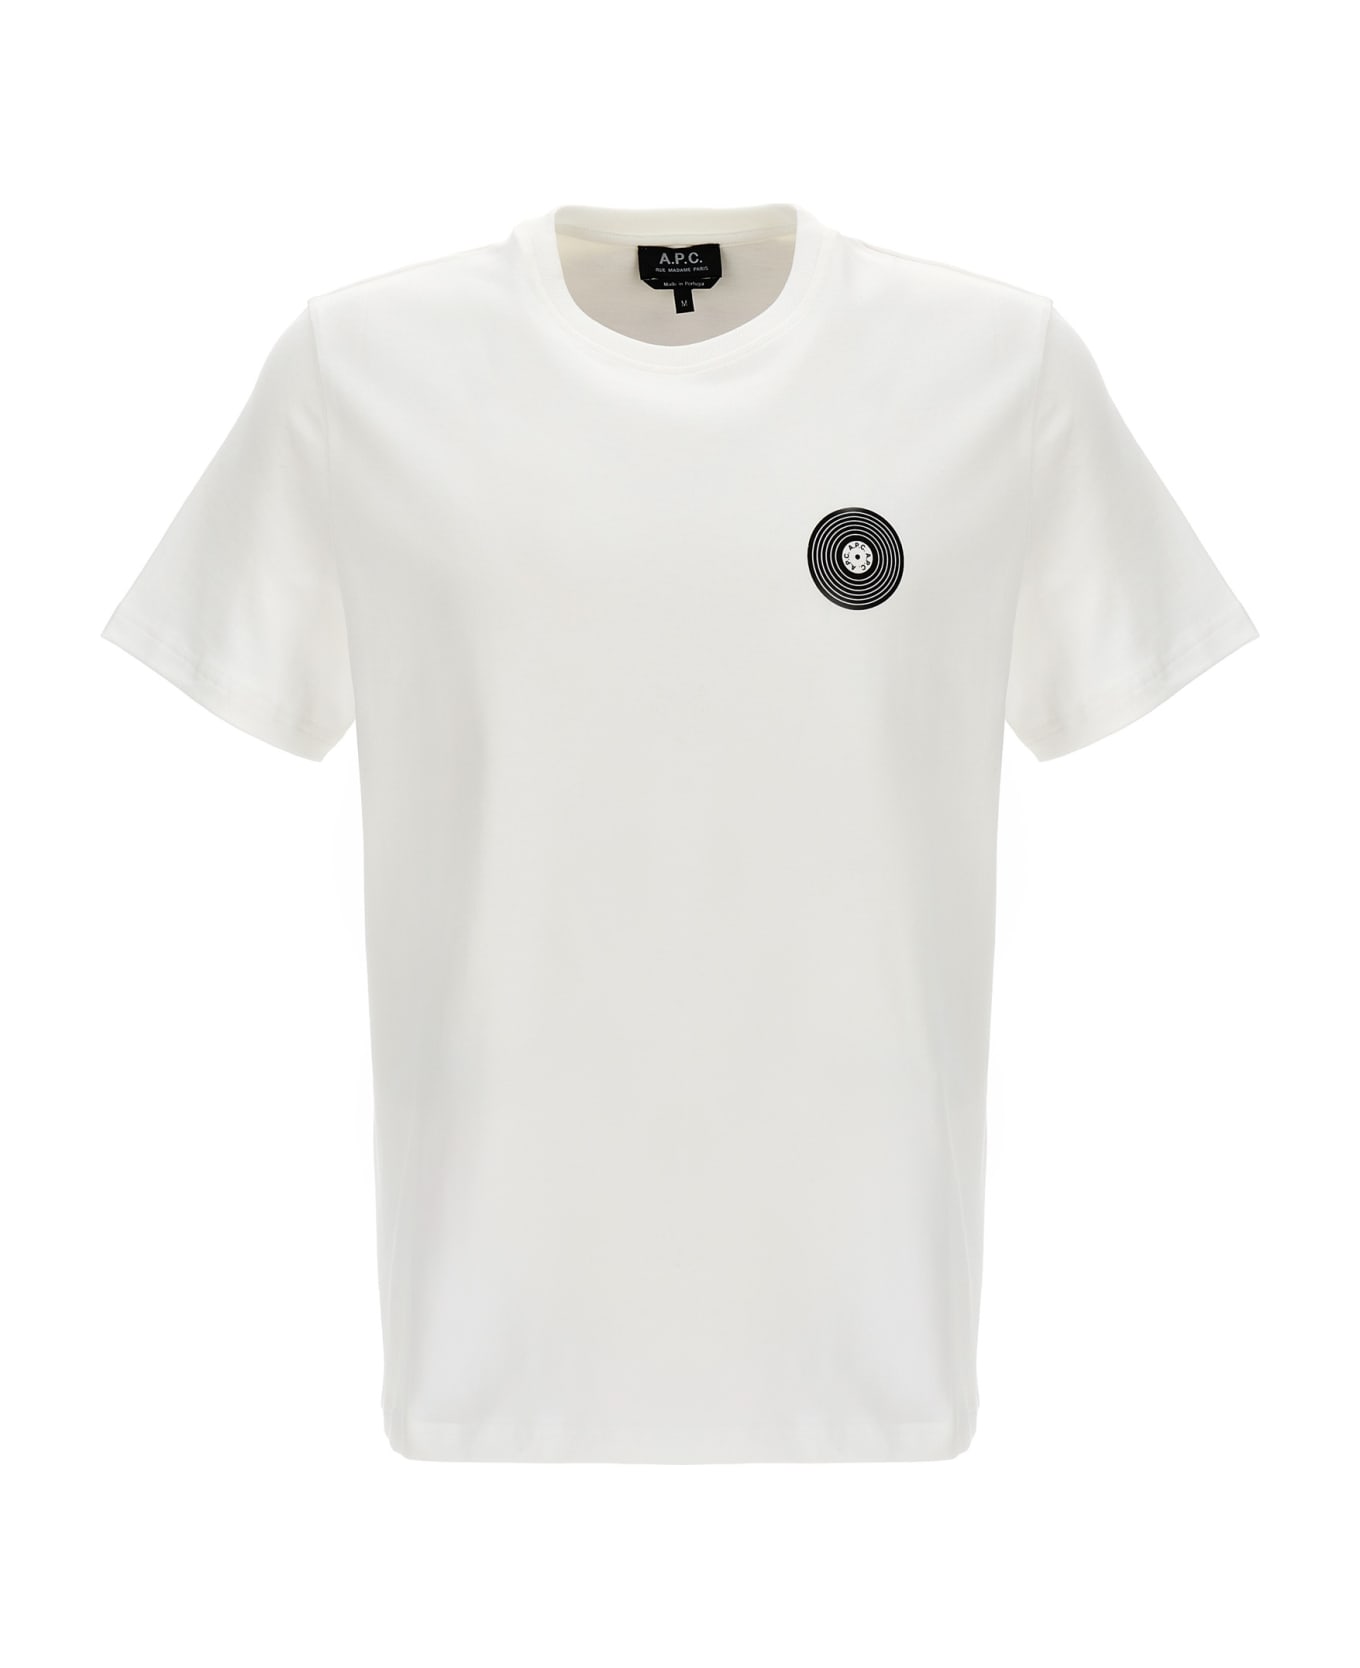 A.P.C. Madison T-shirt - White/Black